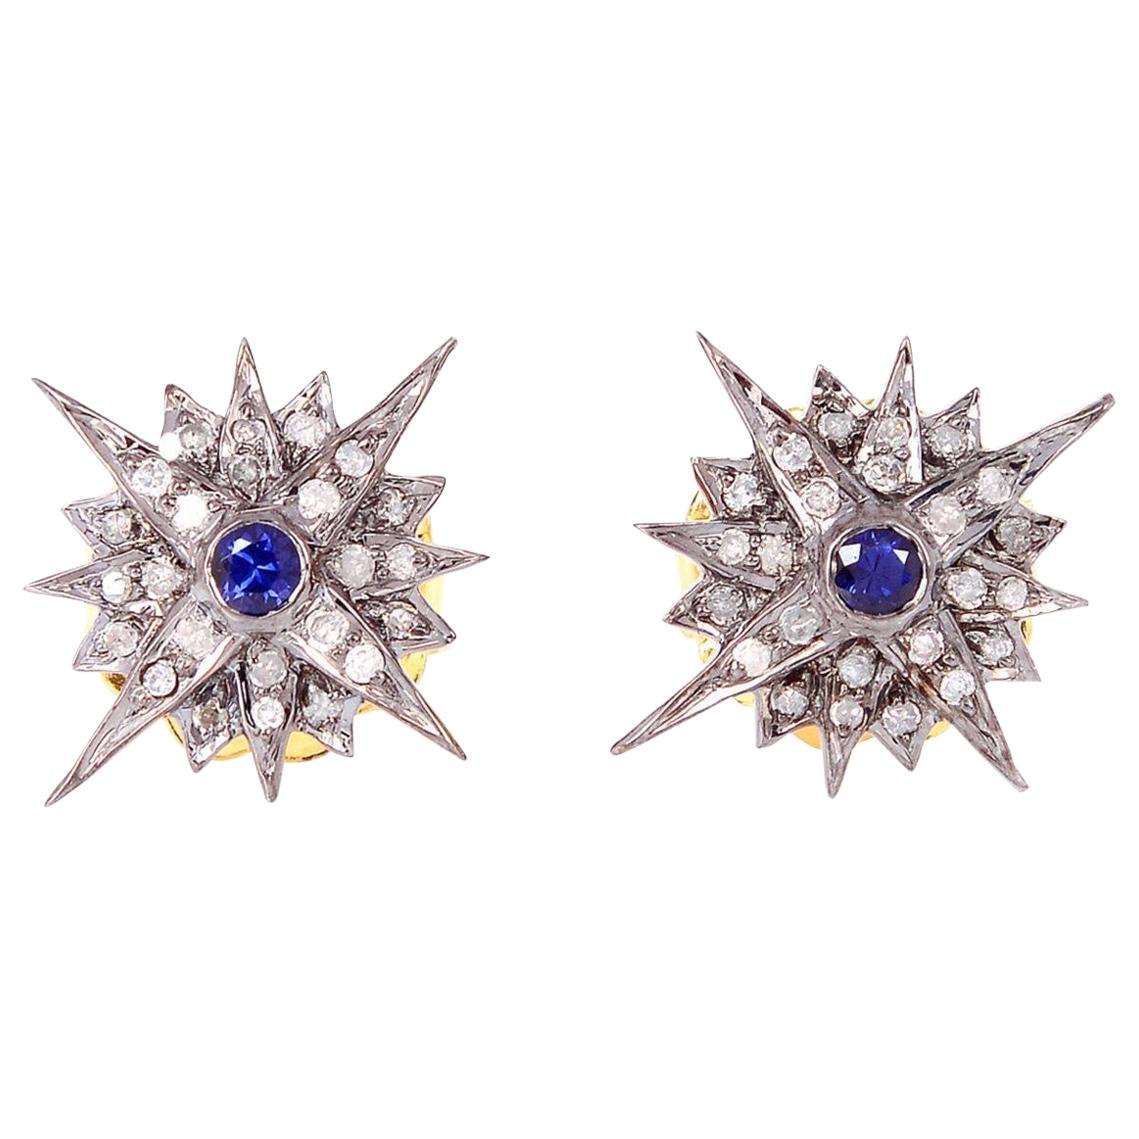 Blue Sapphire Diamond Stud Earrings